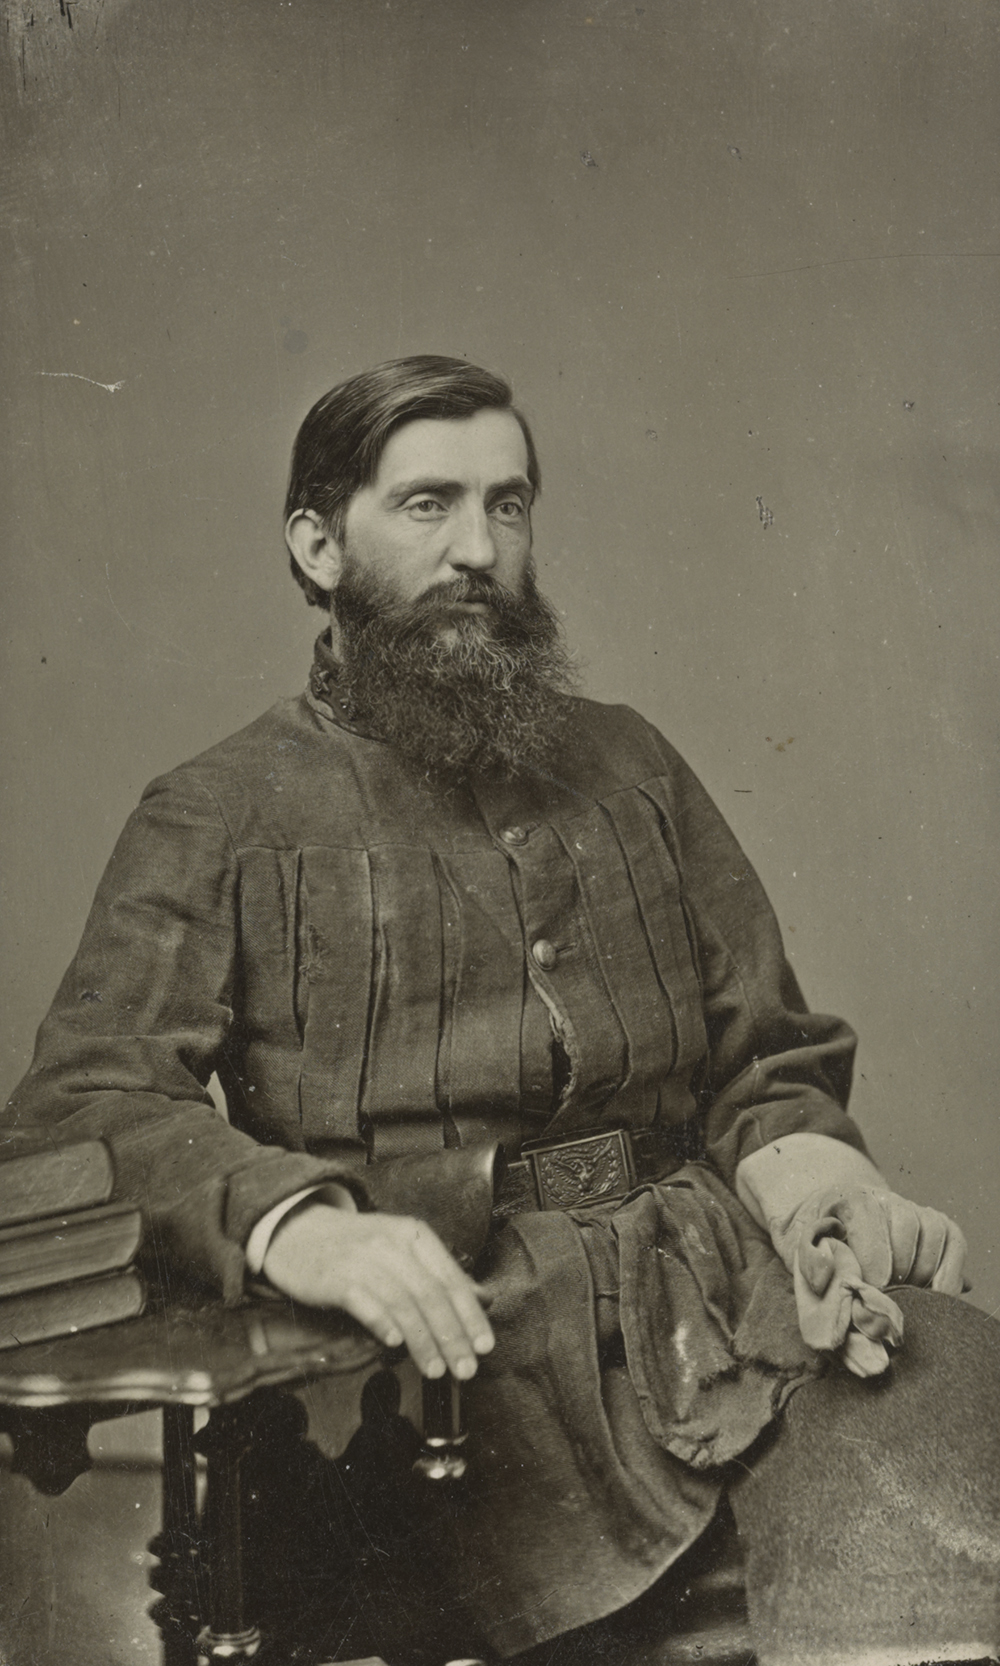 William C.P. Breckinridge, 1864. Library of Congress, Prints and Photographs Division.